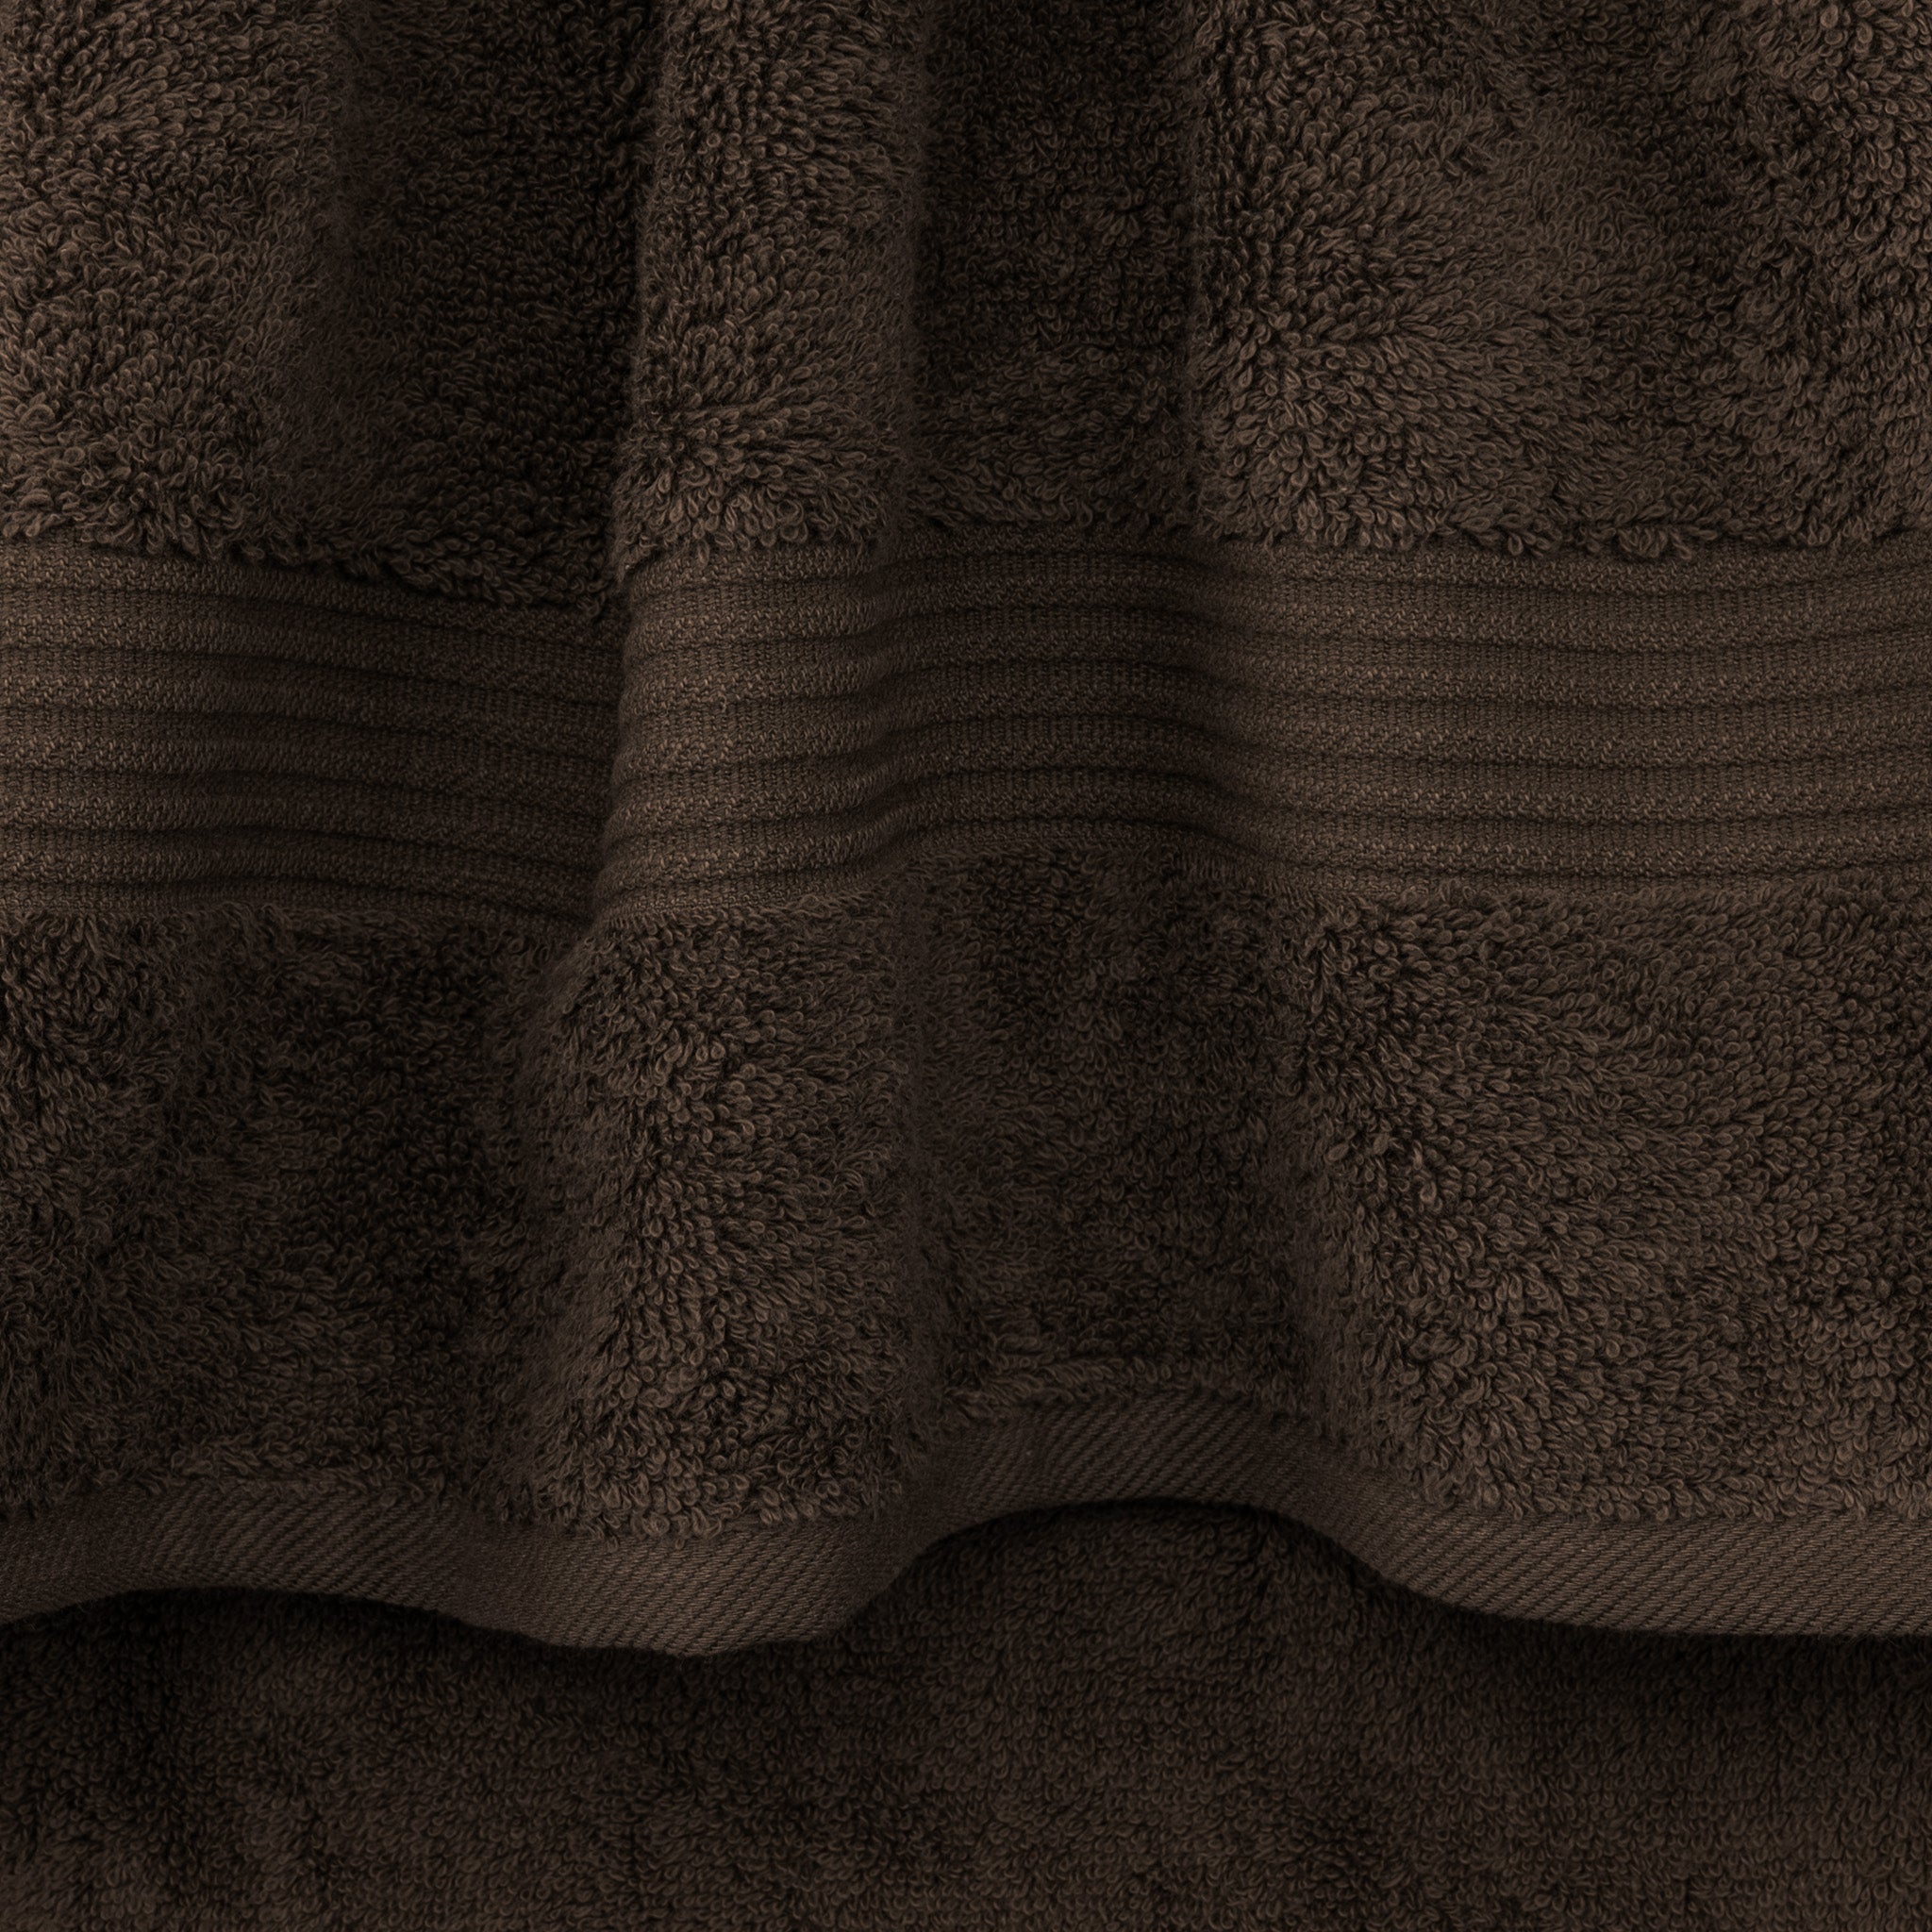 American Soft Linen Bekos 100% Cotton Turkish Towels 6 Piece Bath Towel Set -chocolate-brown-03